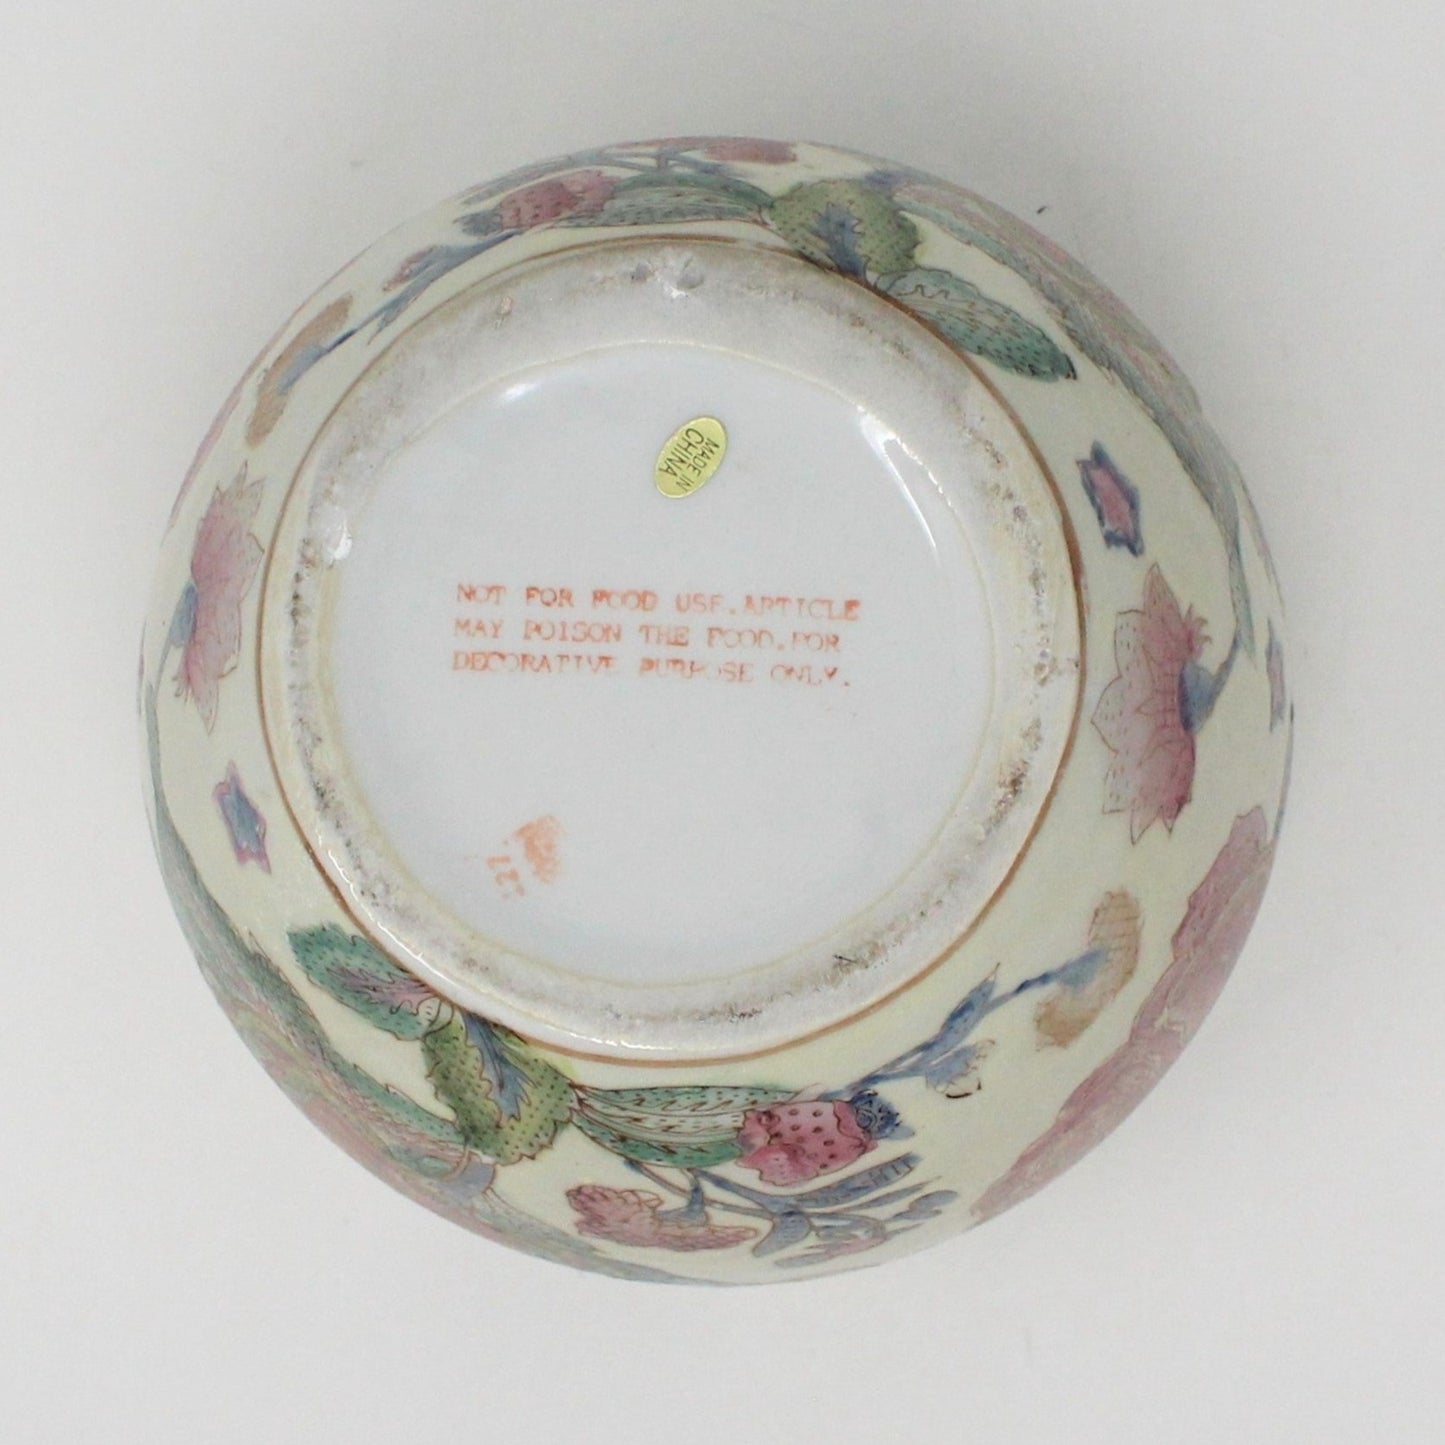 Planter, Oriental Fish Bowl, Porcelain Enamel Pink Floral, Vintage